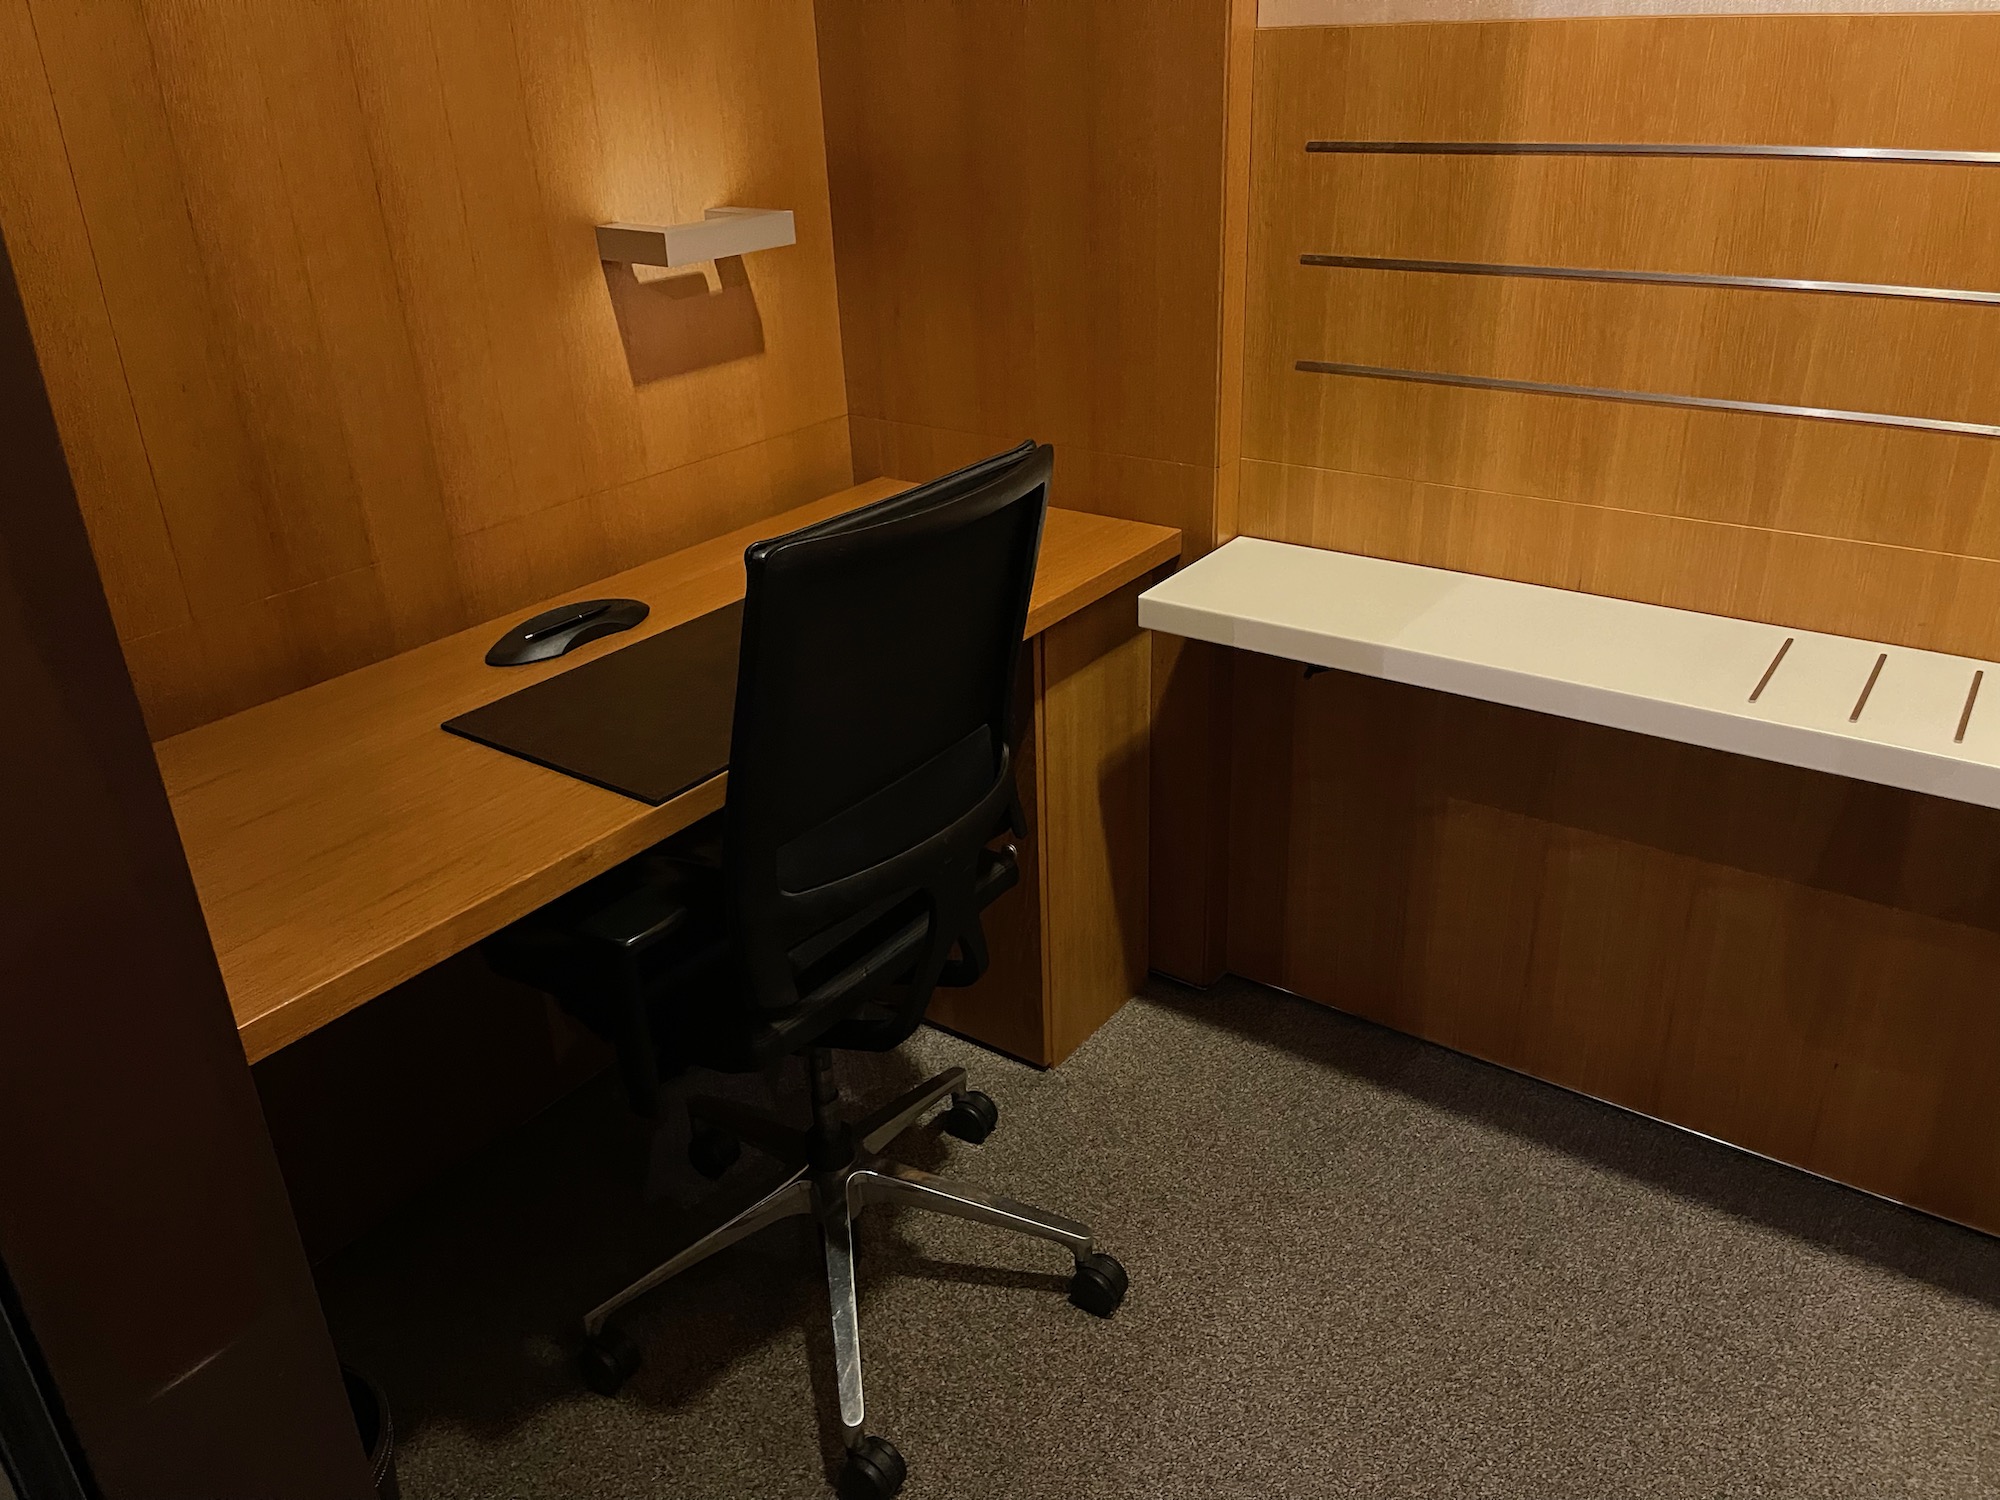 a chair at a desk